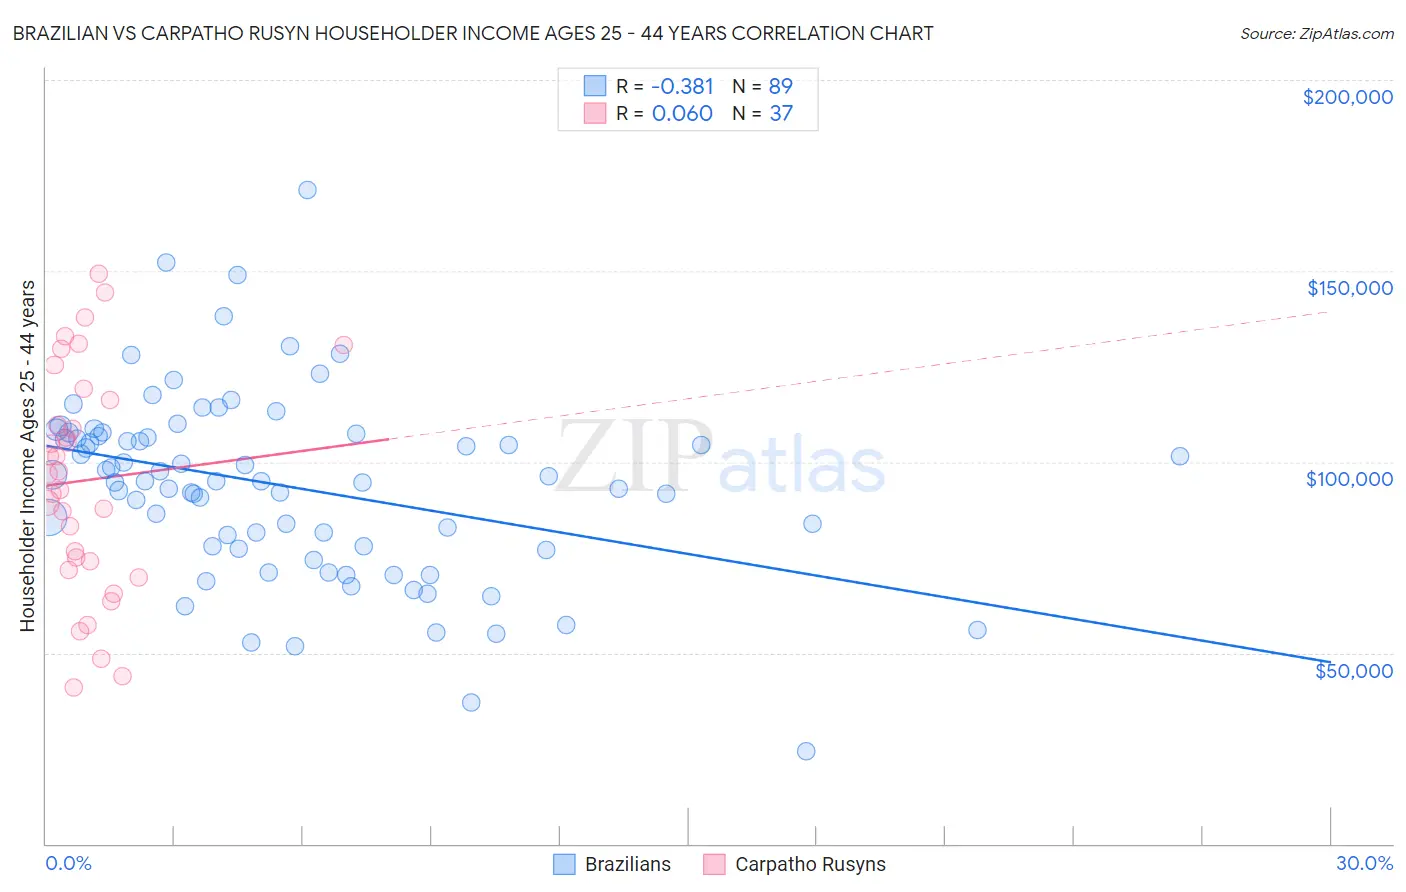 Brazilian vs Carpatho Rusyn Householder Income Ages 25 - 44 years